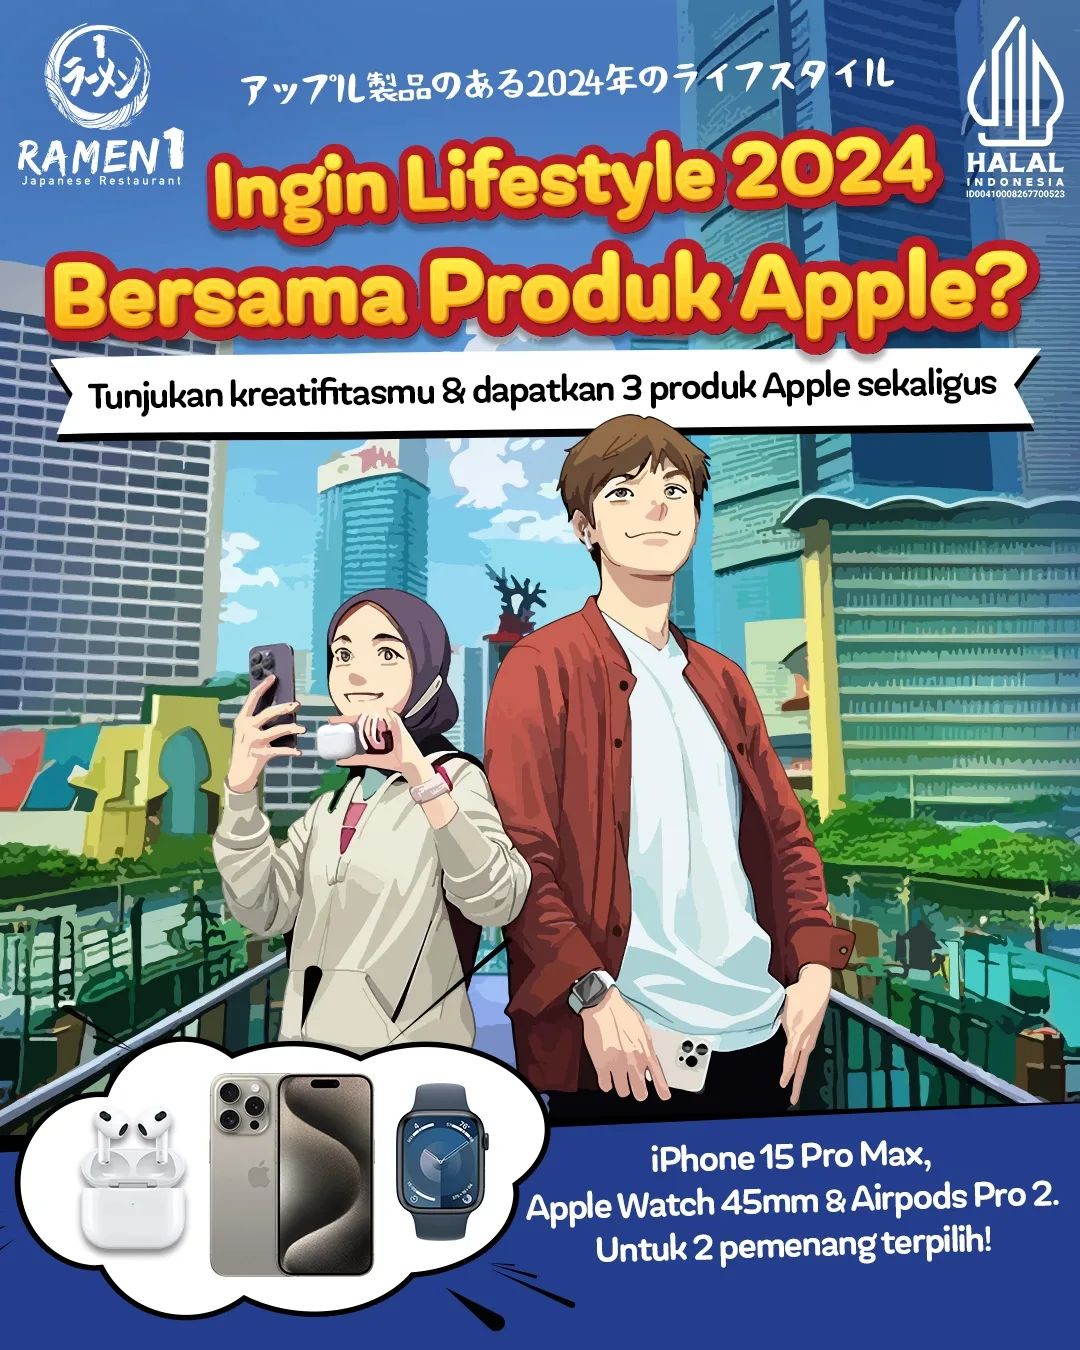 Ramen1 Apple Lifestyle Challenge Berhadiah iPhone 15 Pro Max